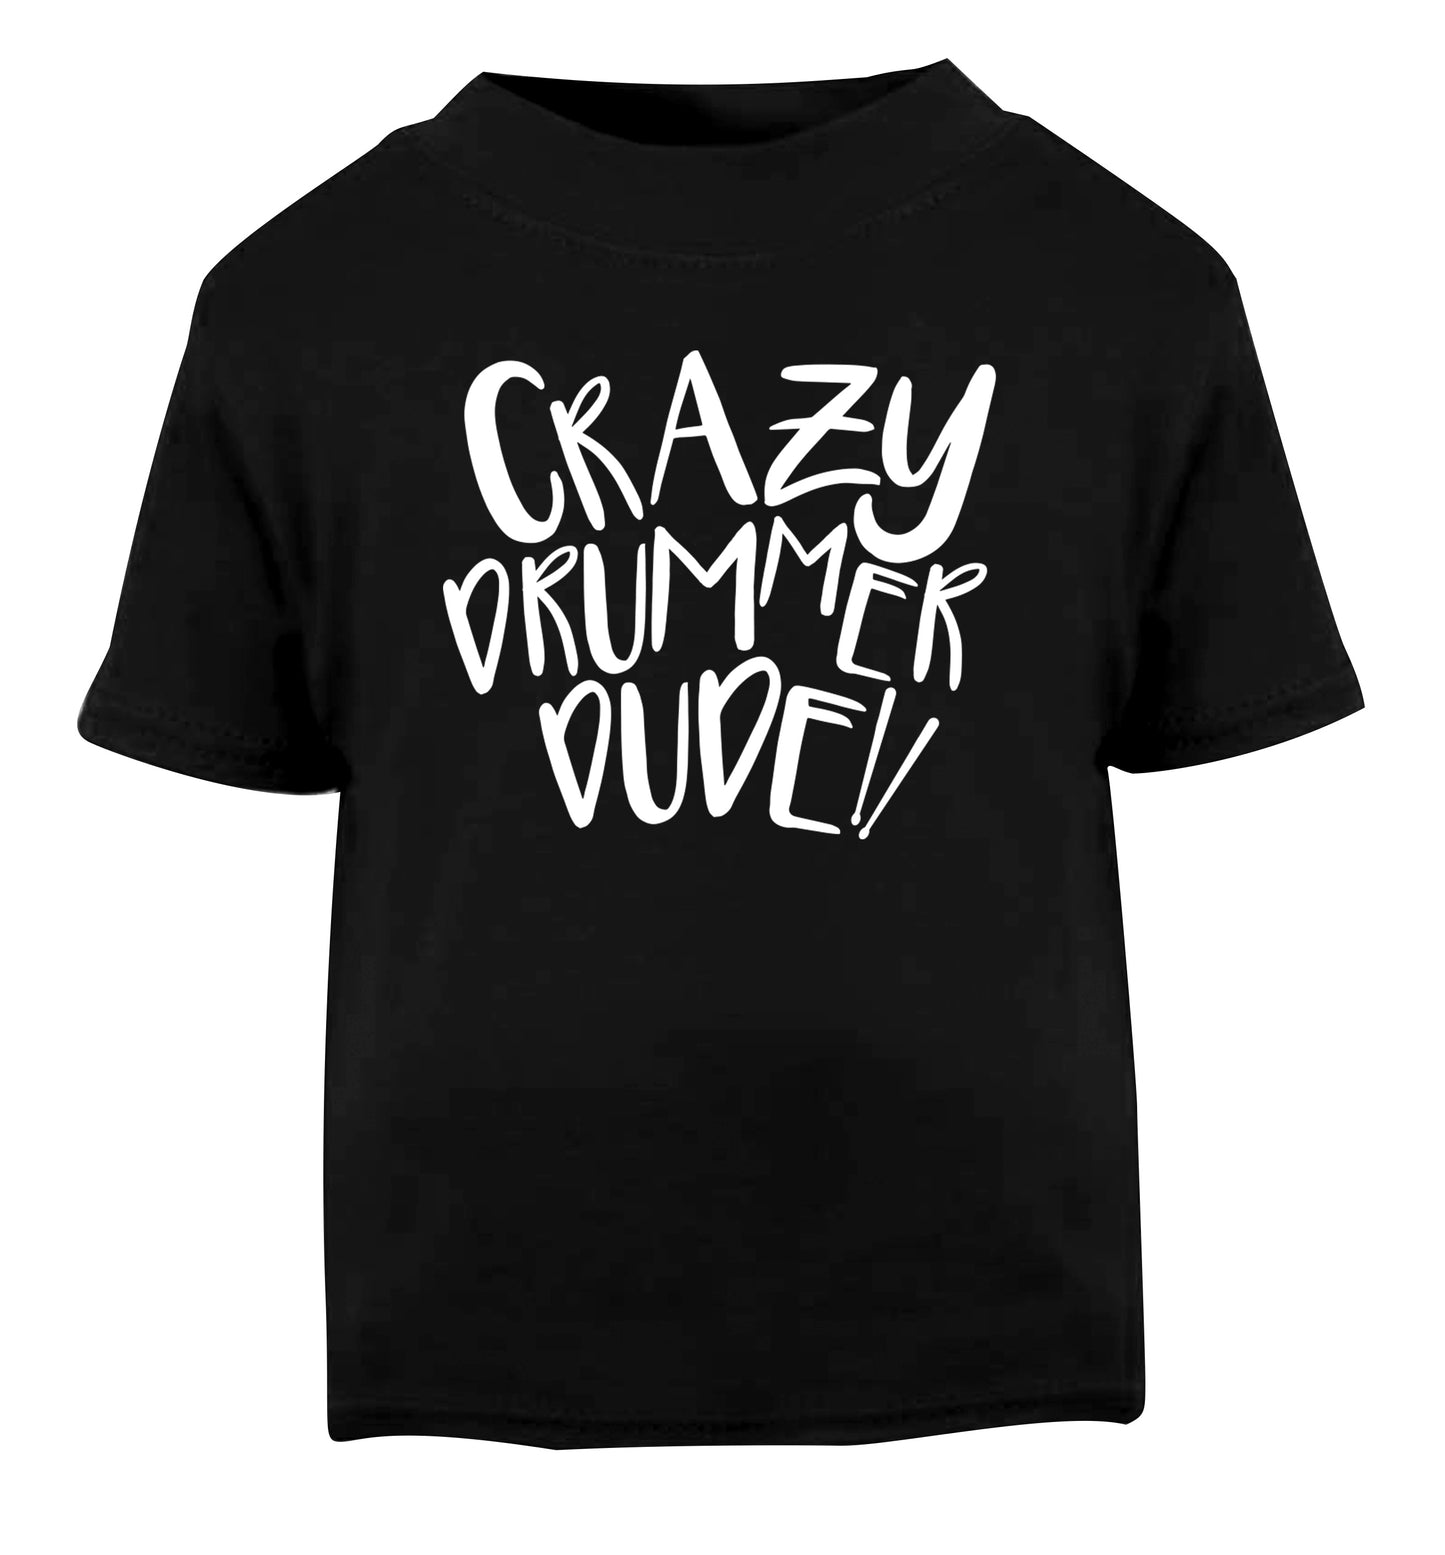 Crazy drummer dude Black Baby Toddler Tshirt 2 years